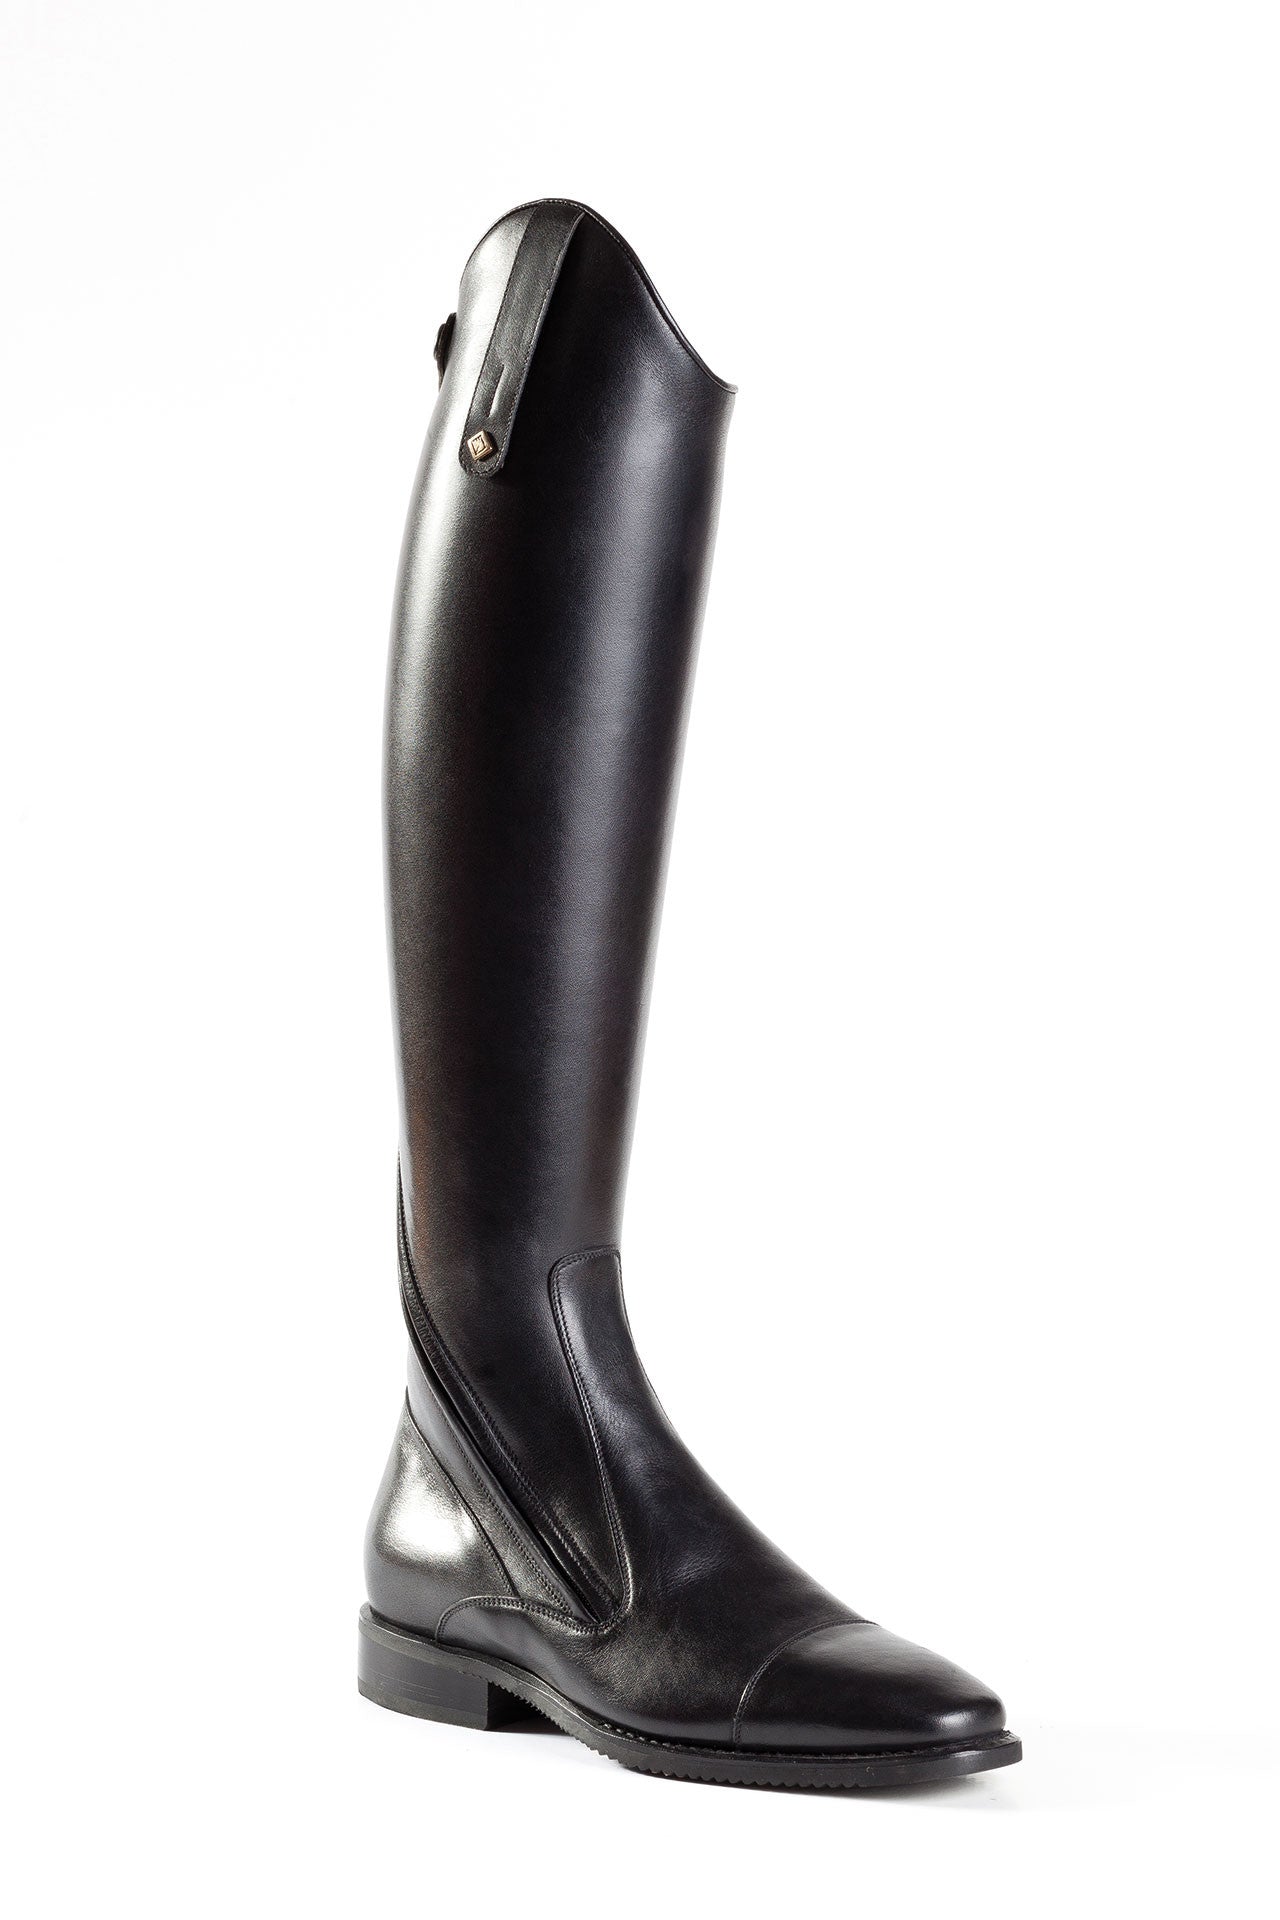 Deniro S4601 Leuca Dress Boot - Gee Gee Equine Equestrian Boutique 
 - 1